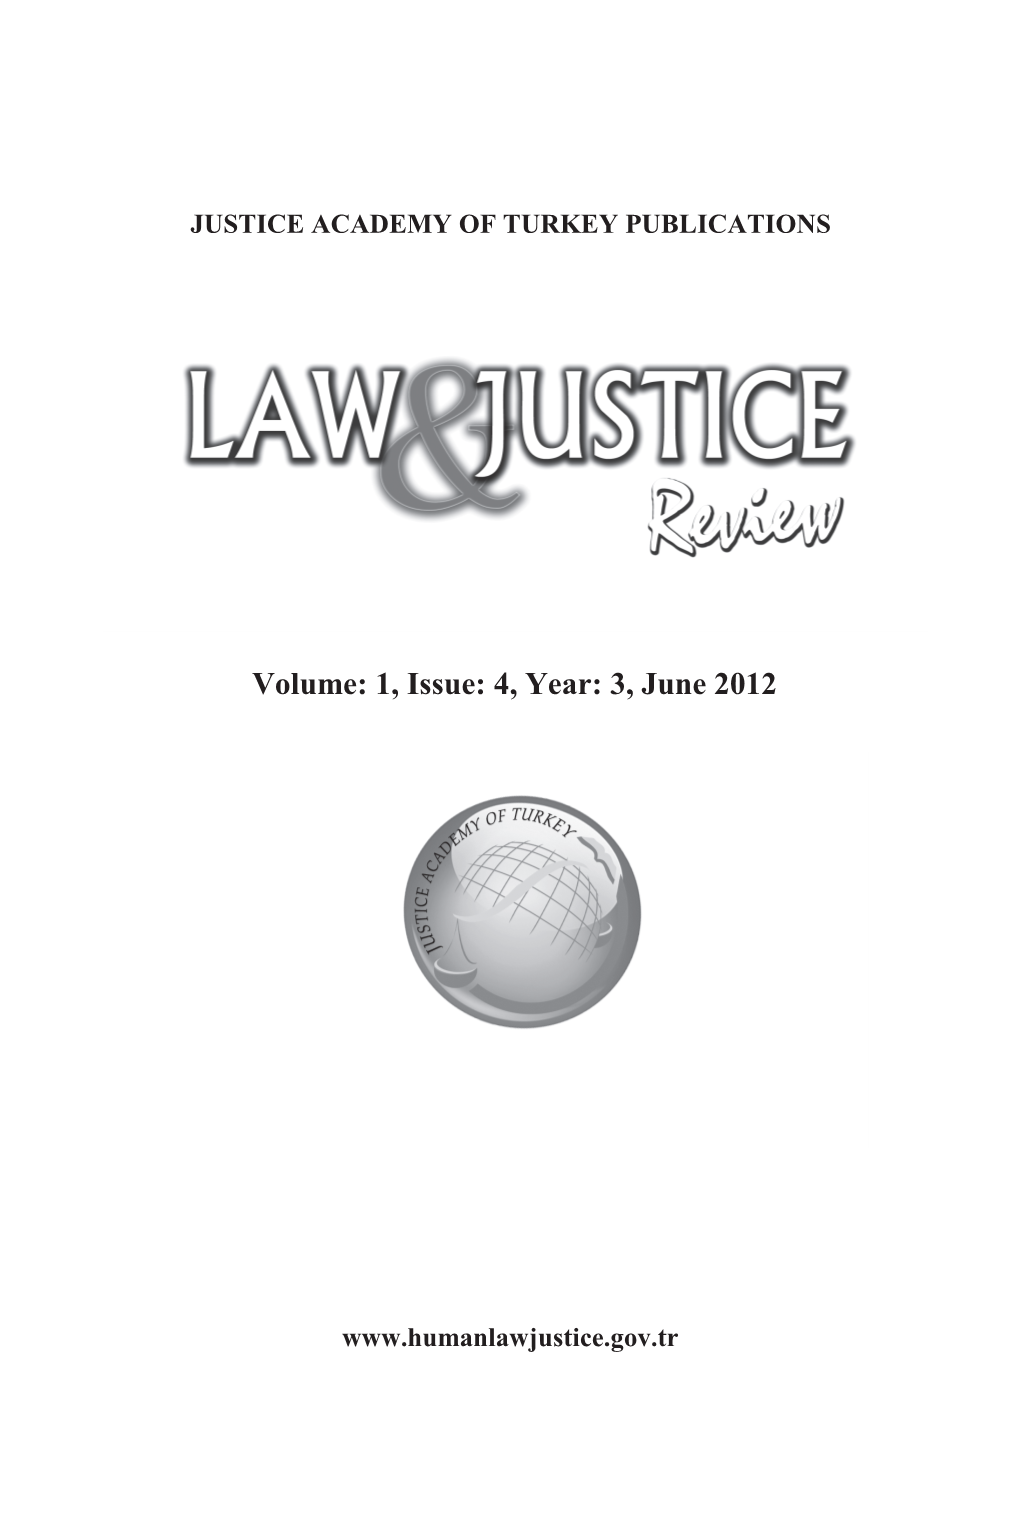 Volume: 1, Issue: 4, Year: 3, June 2012